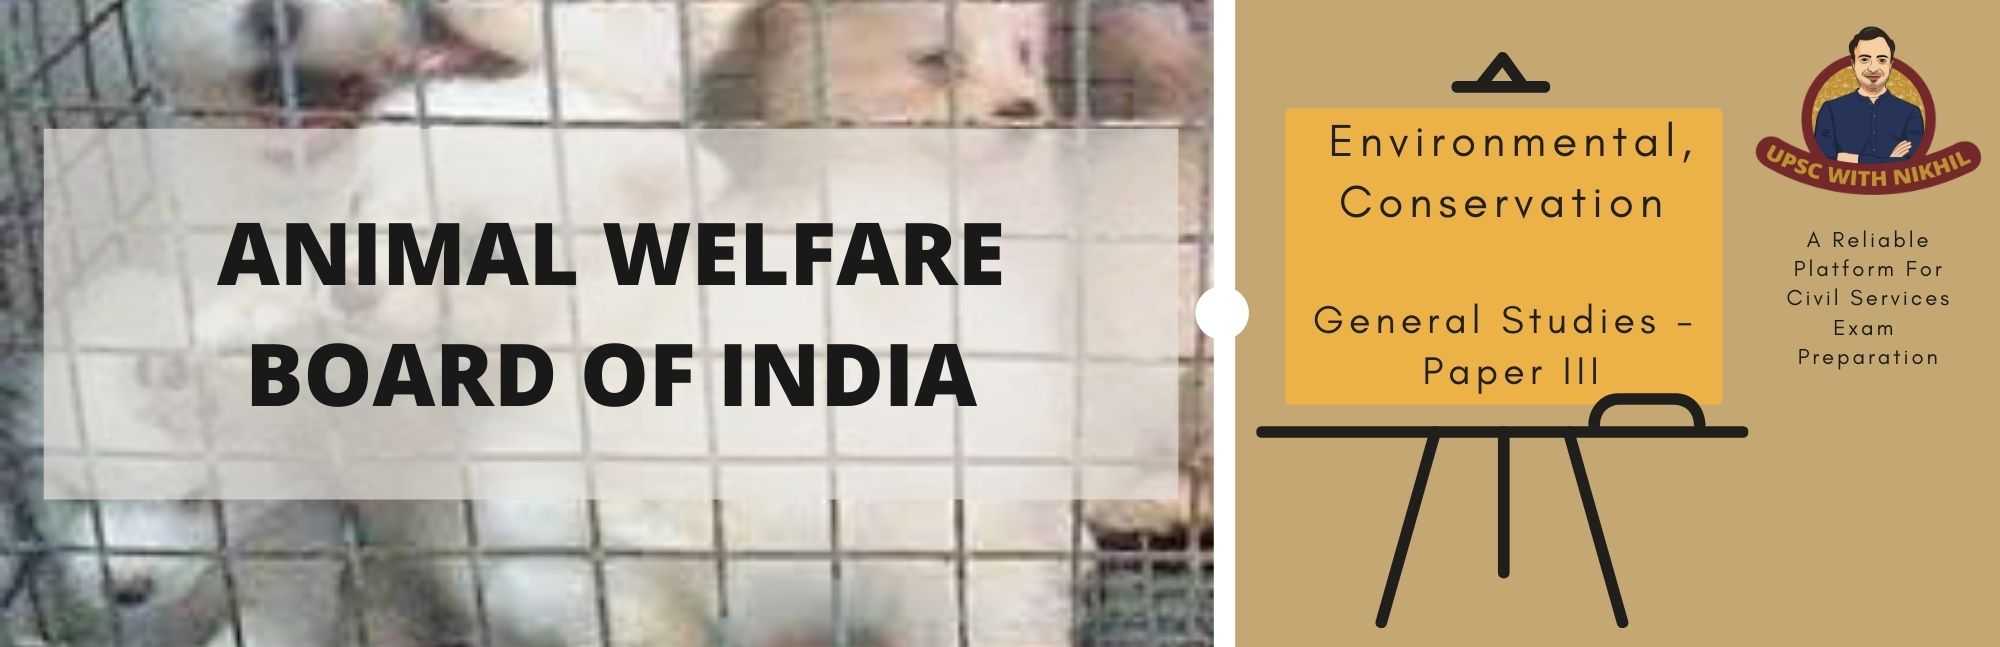 Animal Welfare Board of India